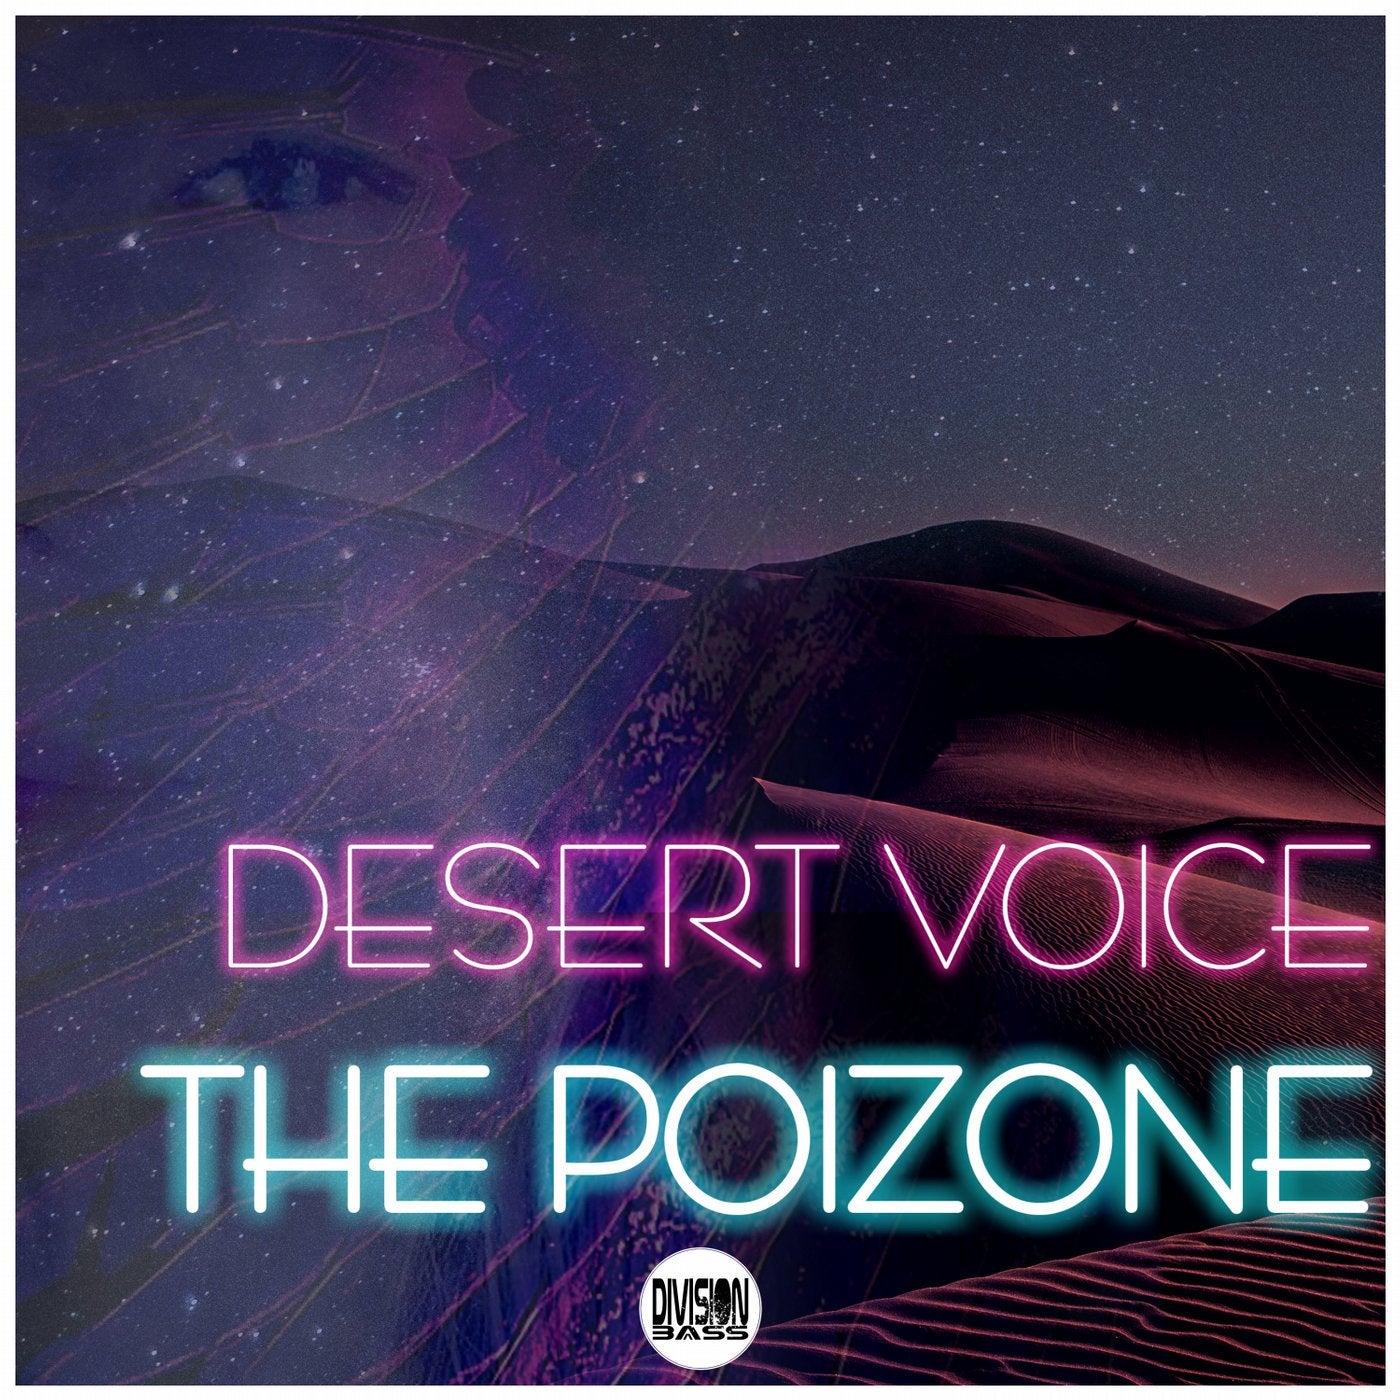 Desert Voice